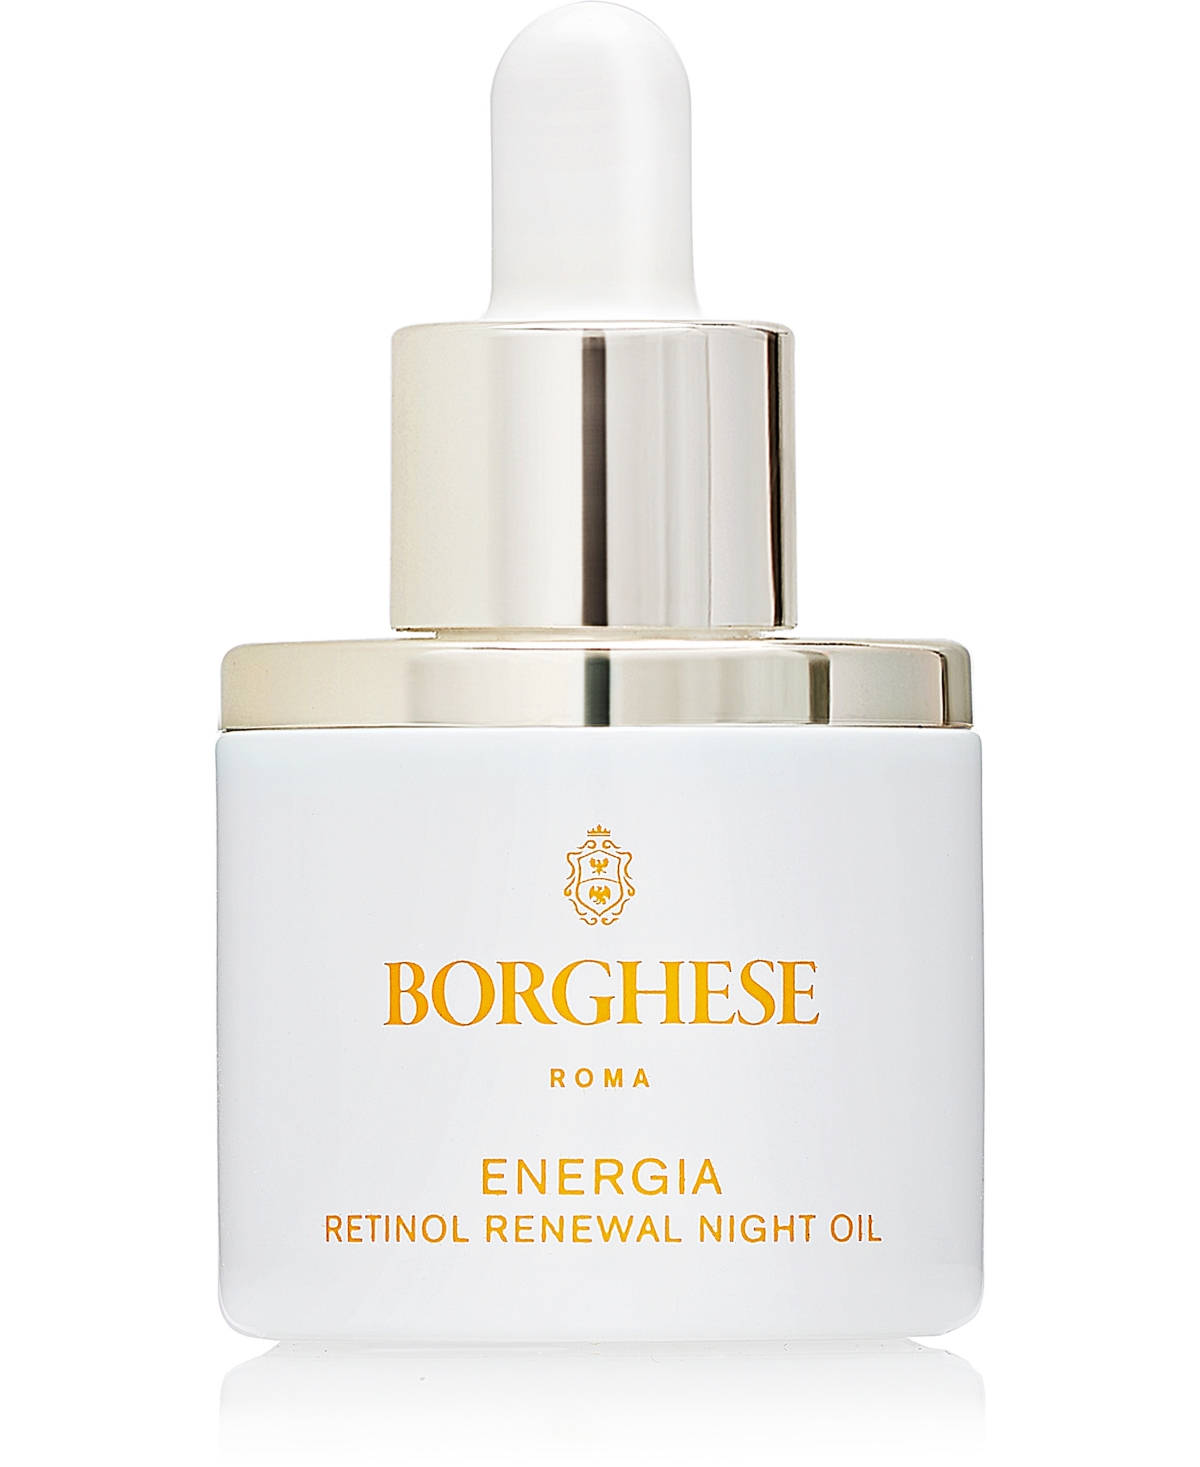 Borghese Energia Retinol Renewal Night Oil, 1 fl. oz.